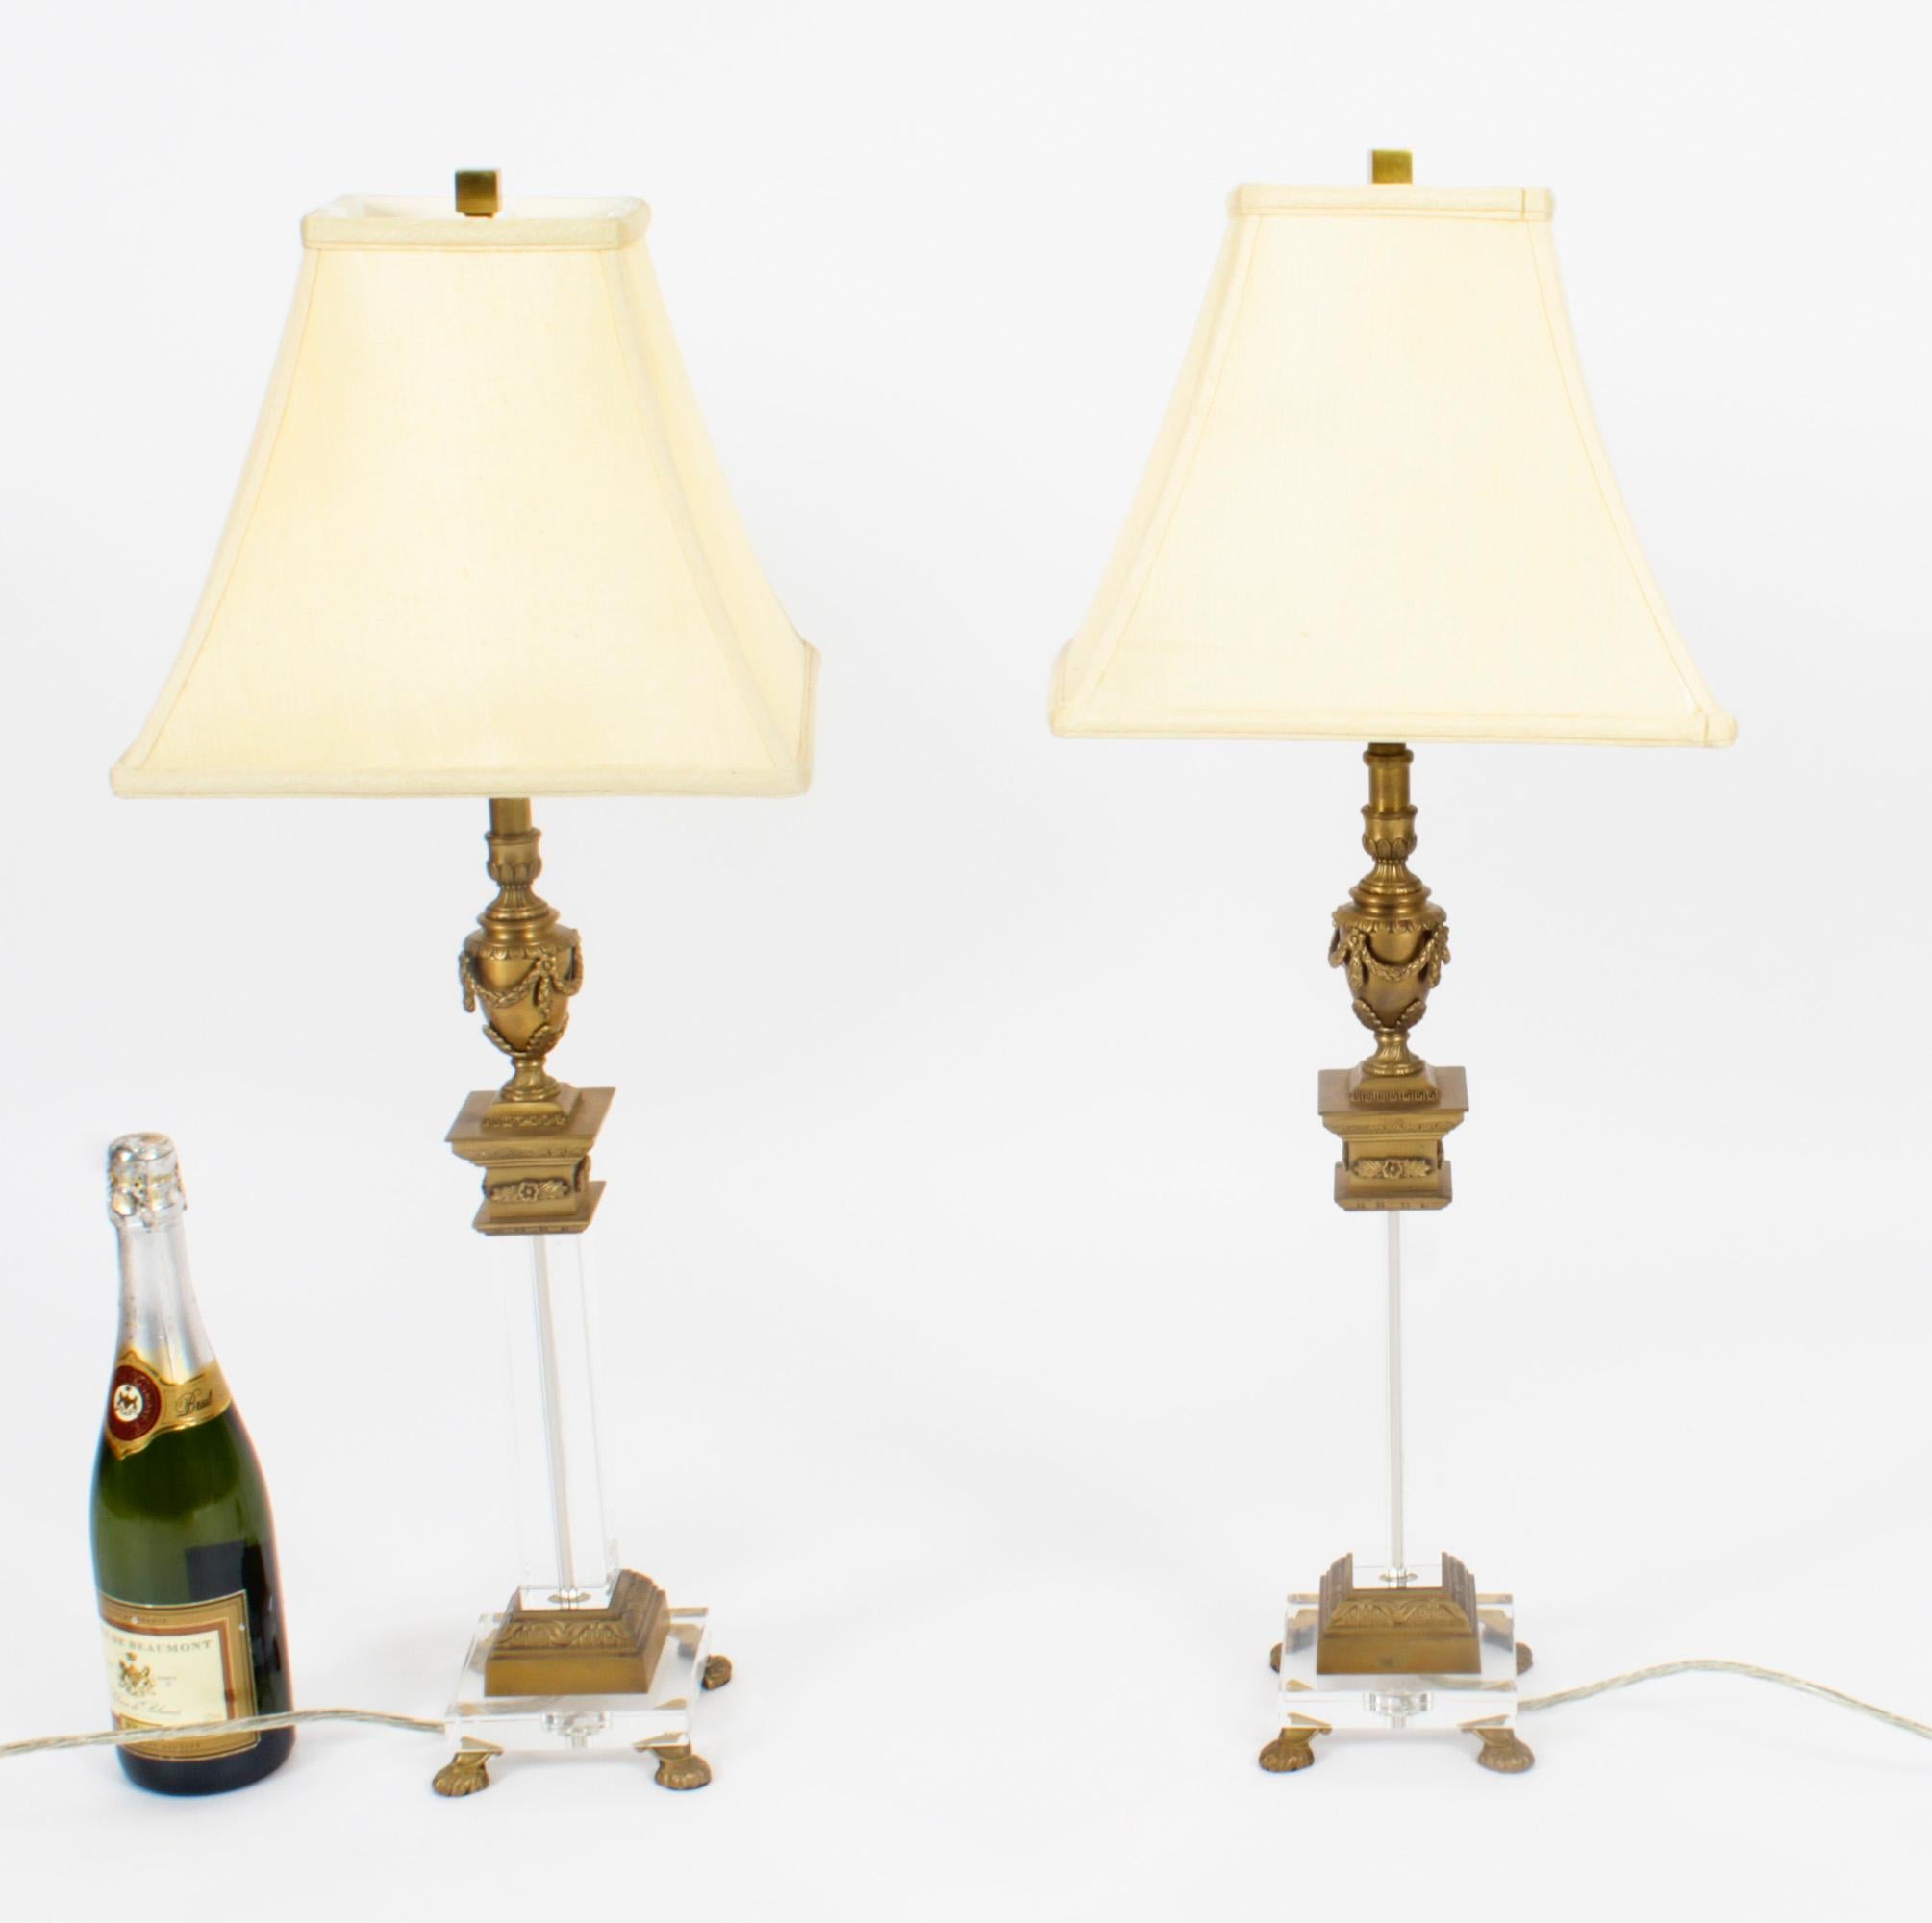 Vintage Set of 4 Corinthian Column Ormolu & Glass Table Lamps, Mid-20th Century For Sale 16